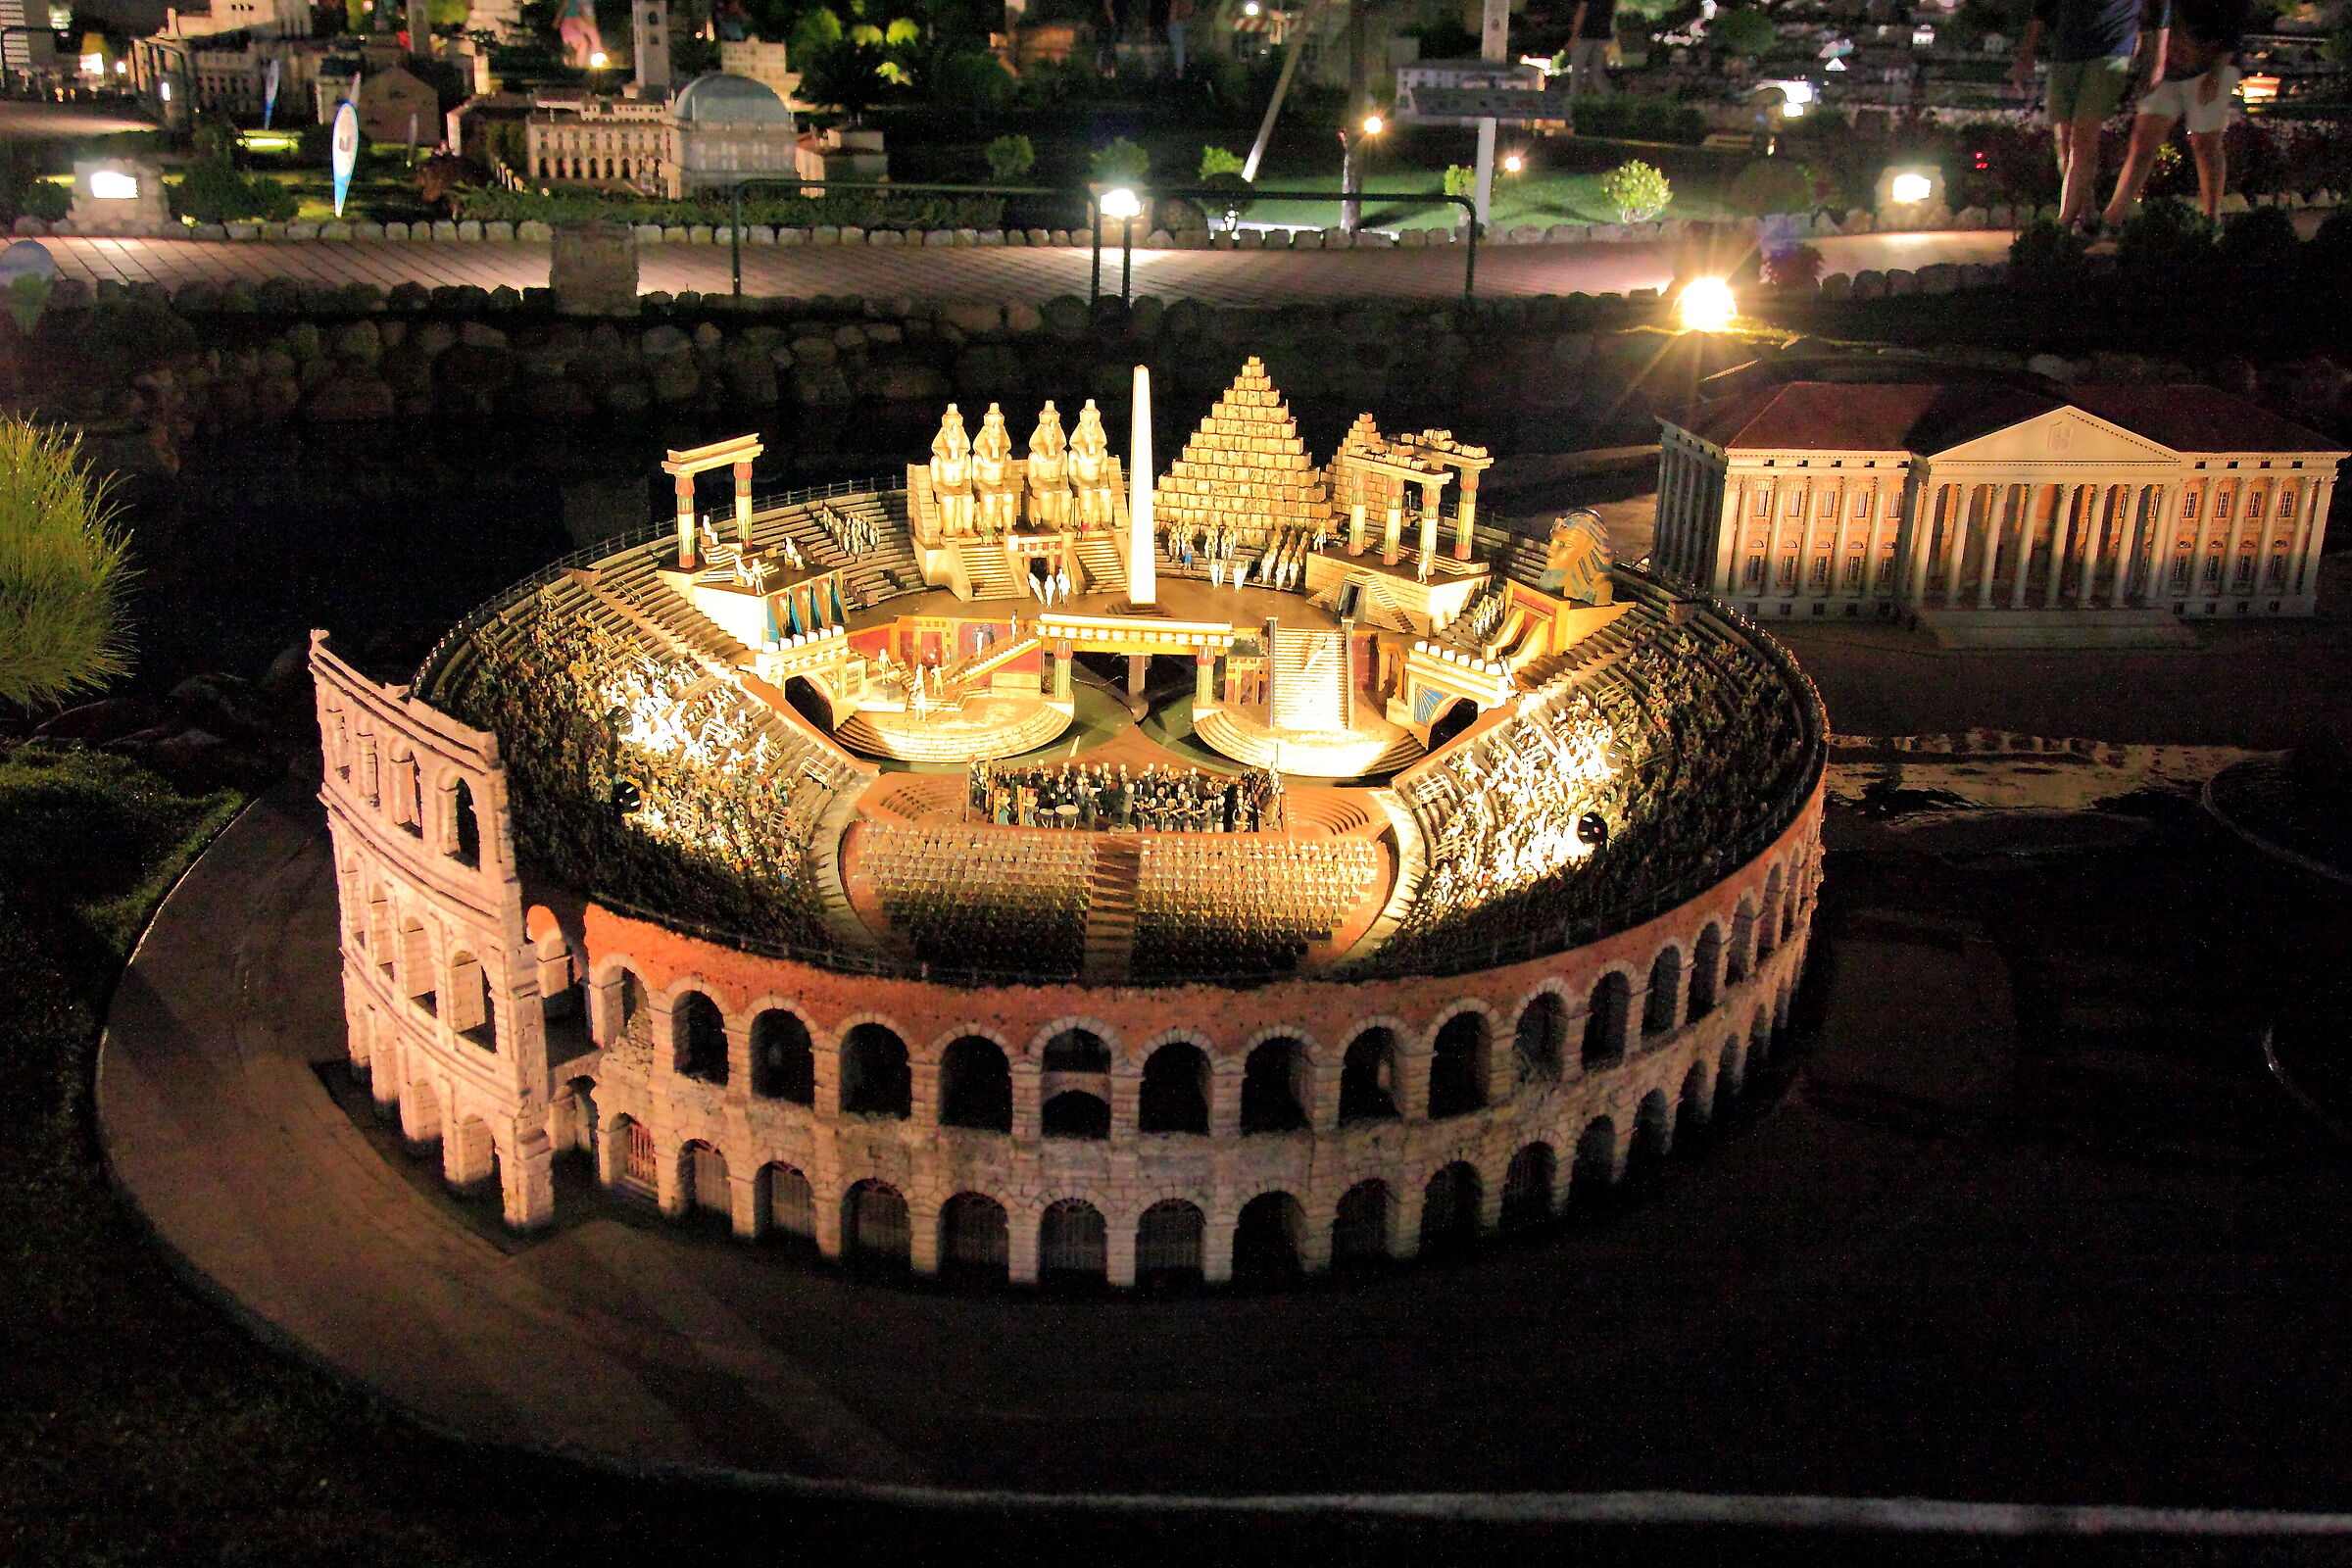 Arena di Verona (Italy in miniature)...